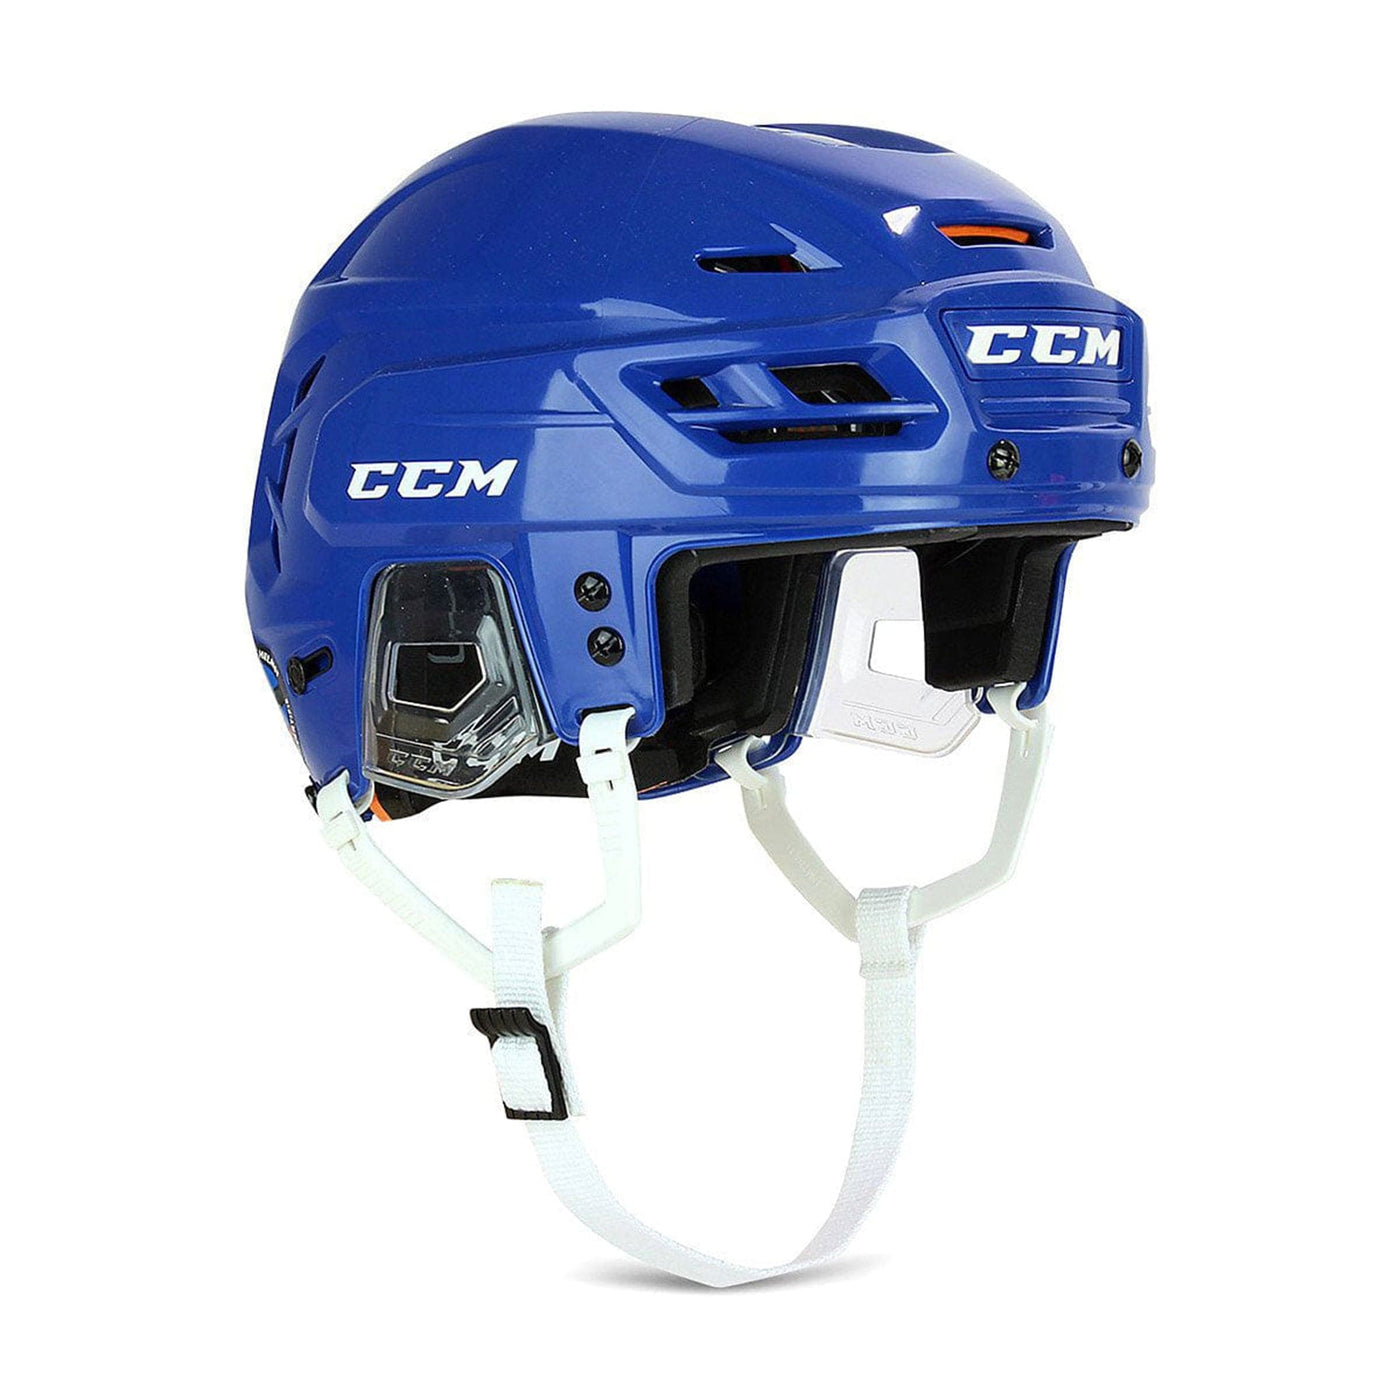 CCM Tacks 710 Hockey Helmet - The Hockey Shop Source For Sports